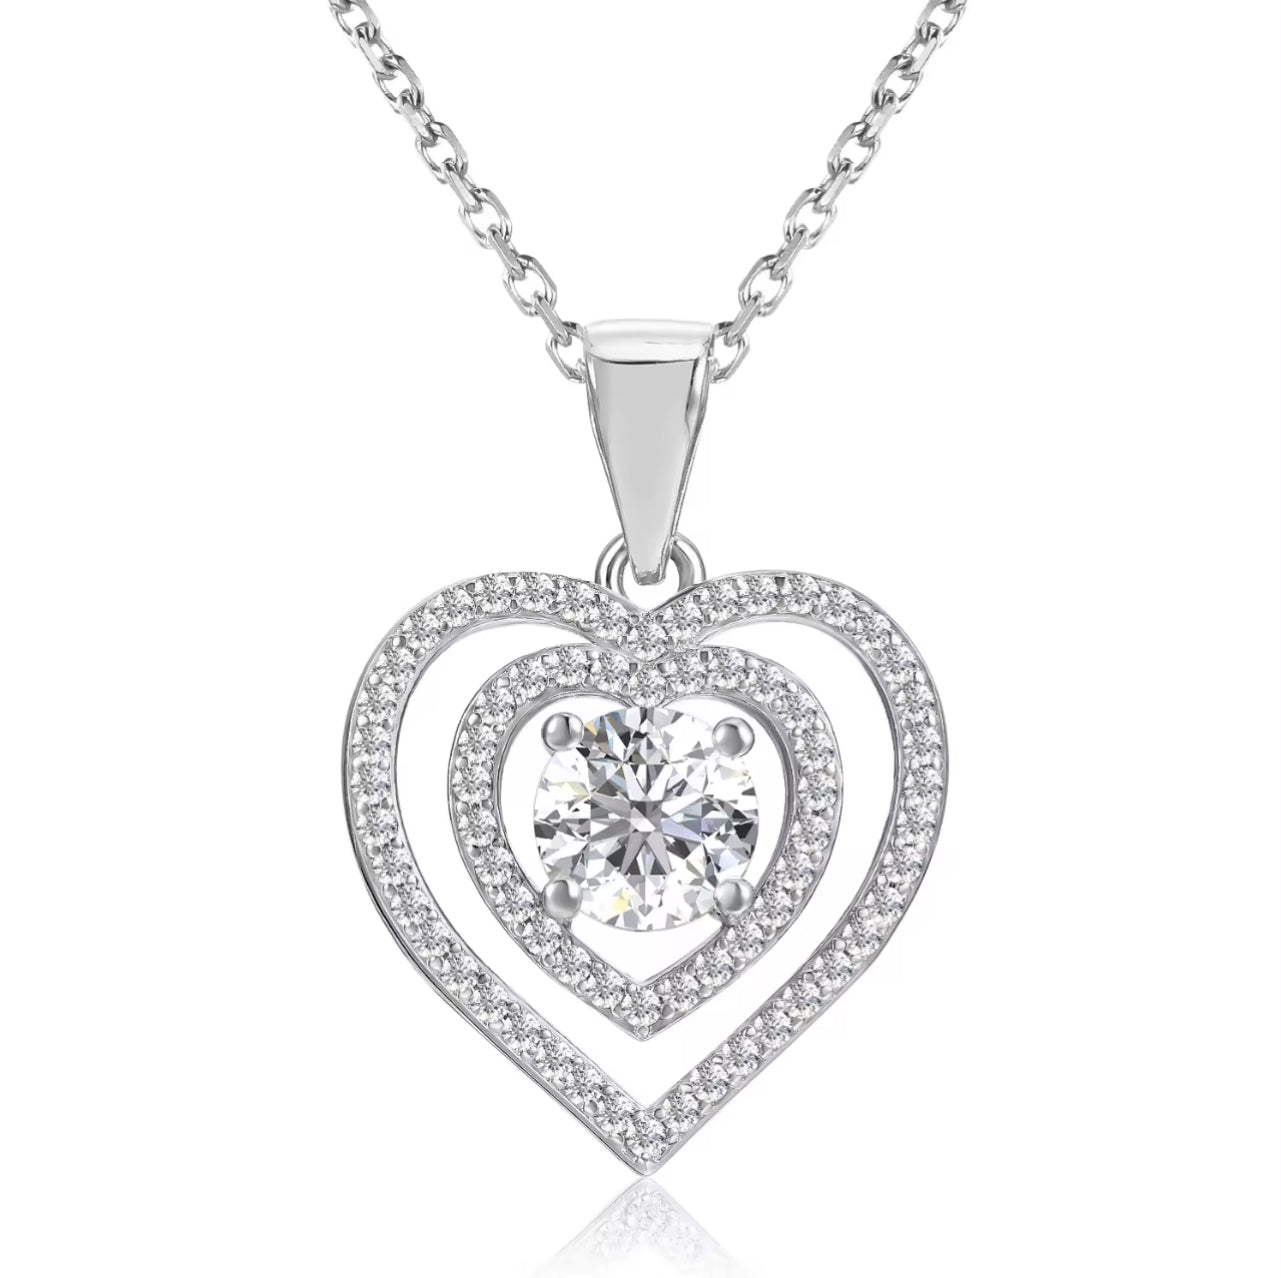 Heart motif necklace